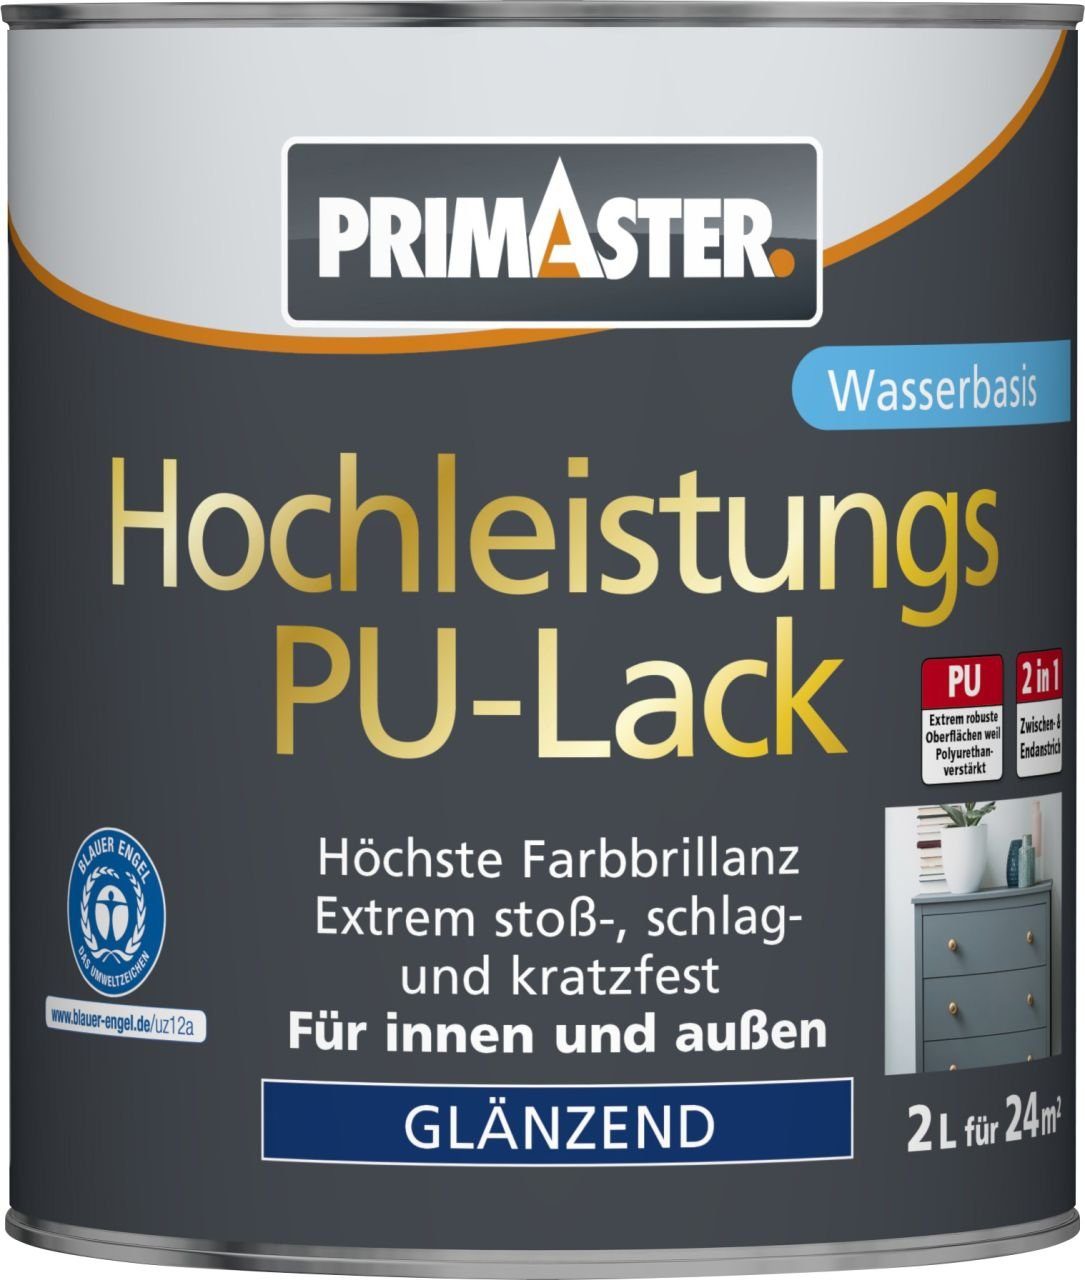 Primaster Acryl-Buntlack Primaster L 2in1 RAL 2 9010 Hochleistungs-PU-Lack